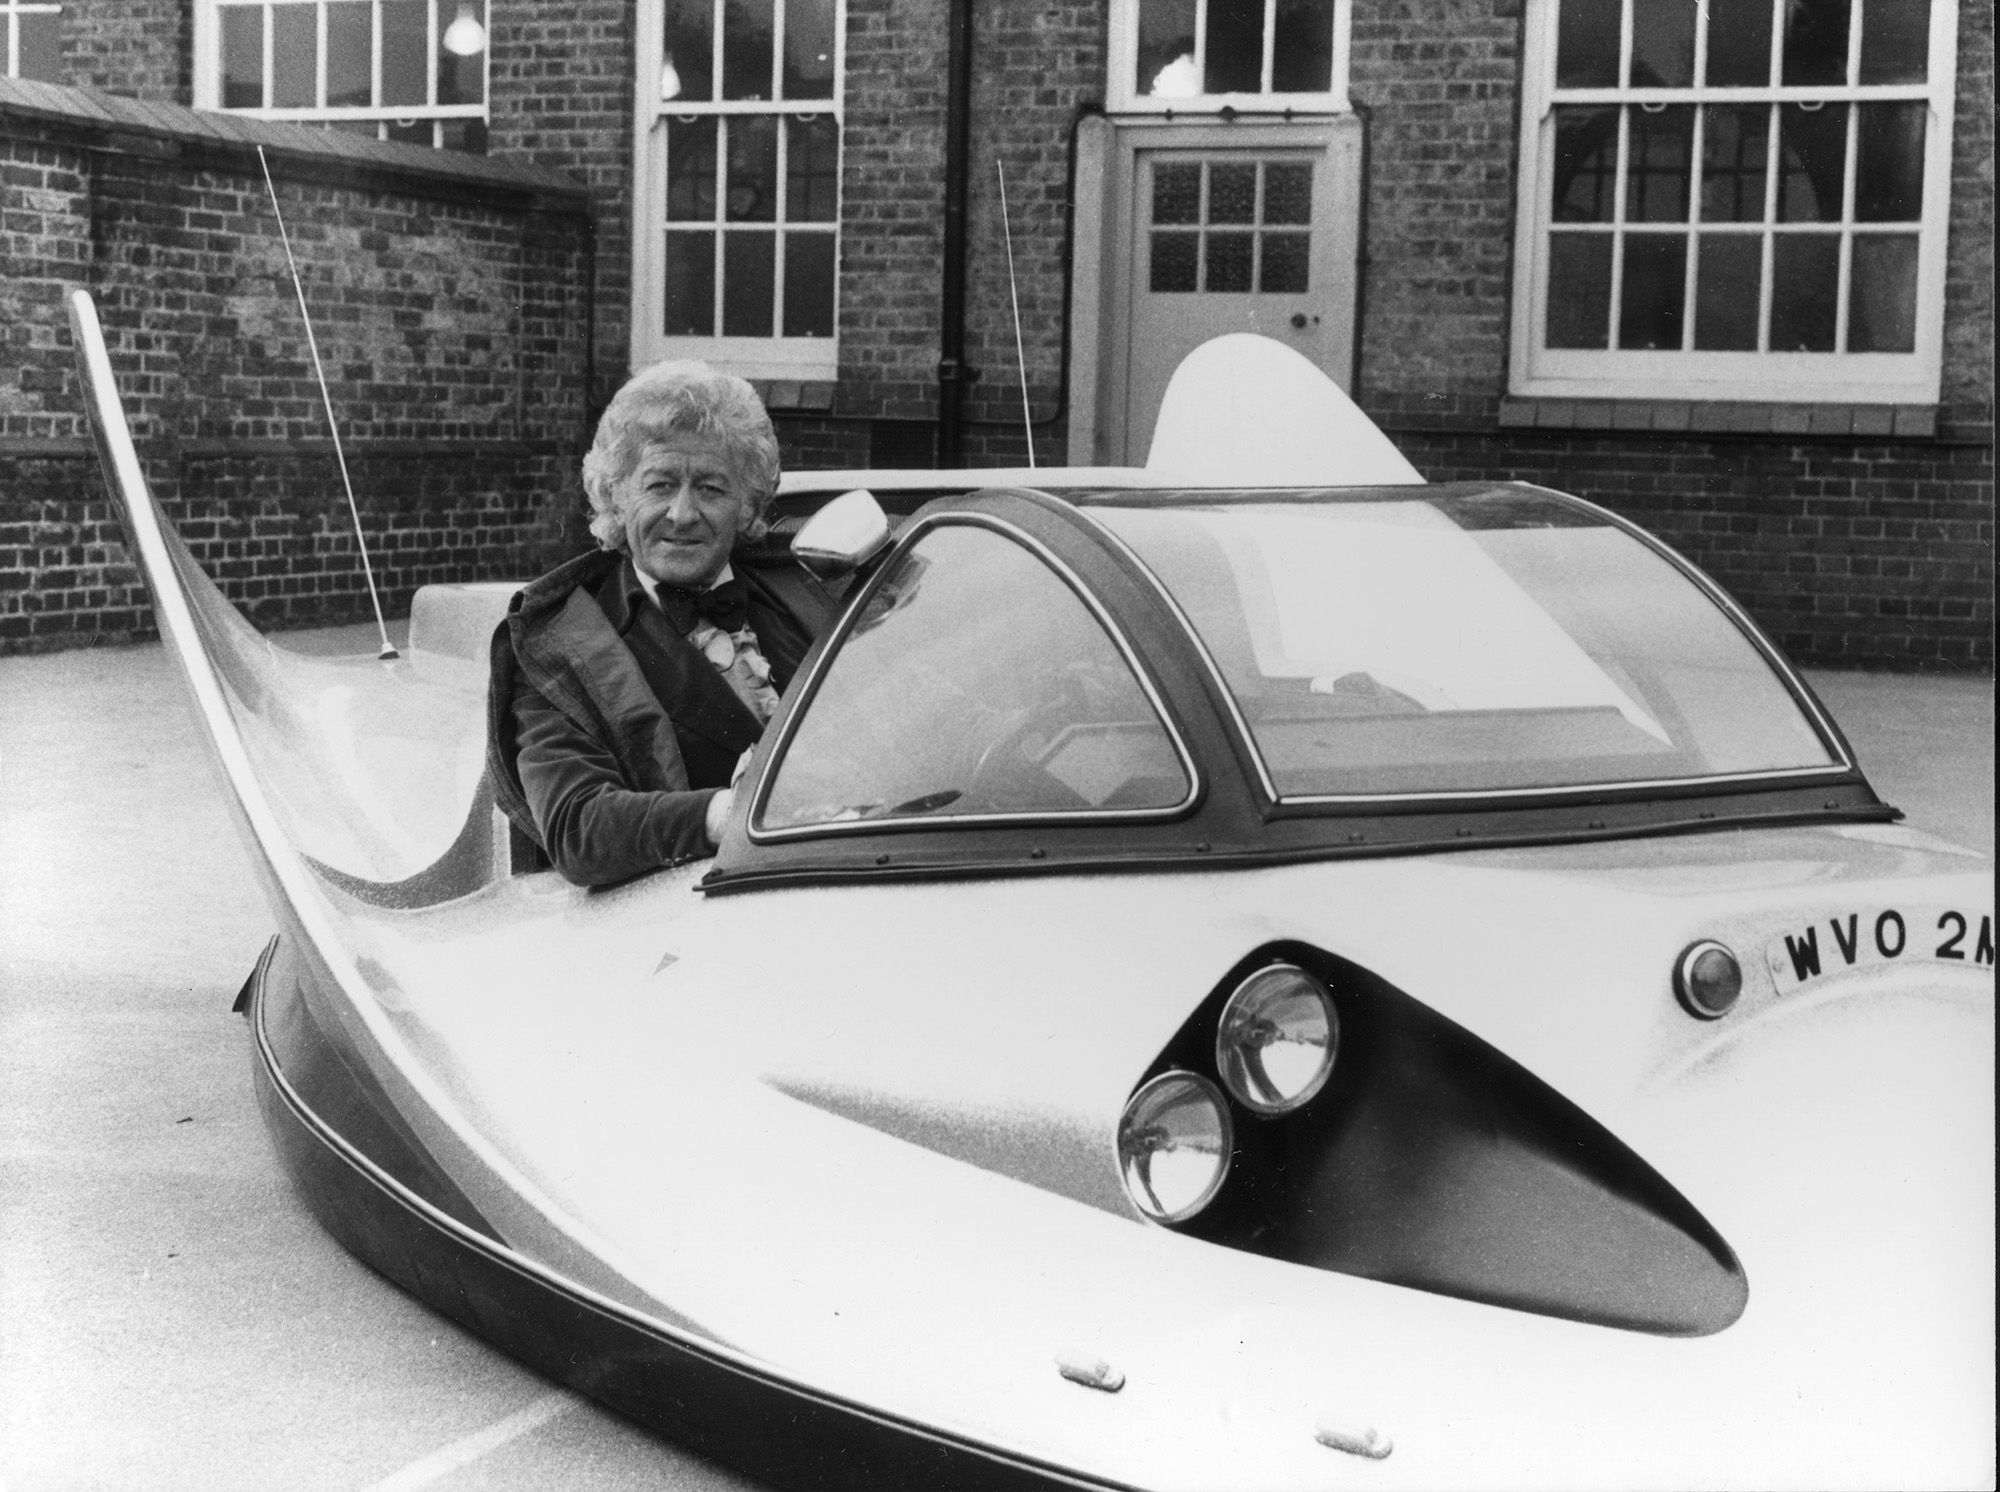 Jon Pertwee in the Whomobile in 1974